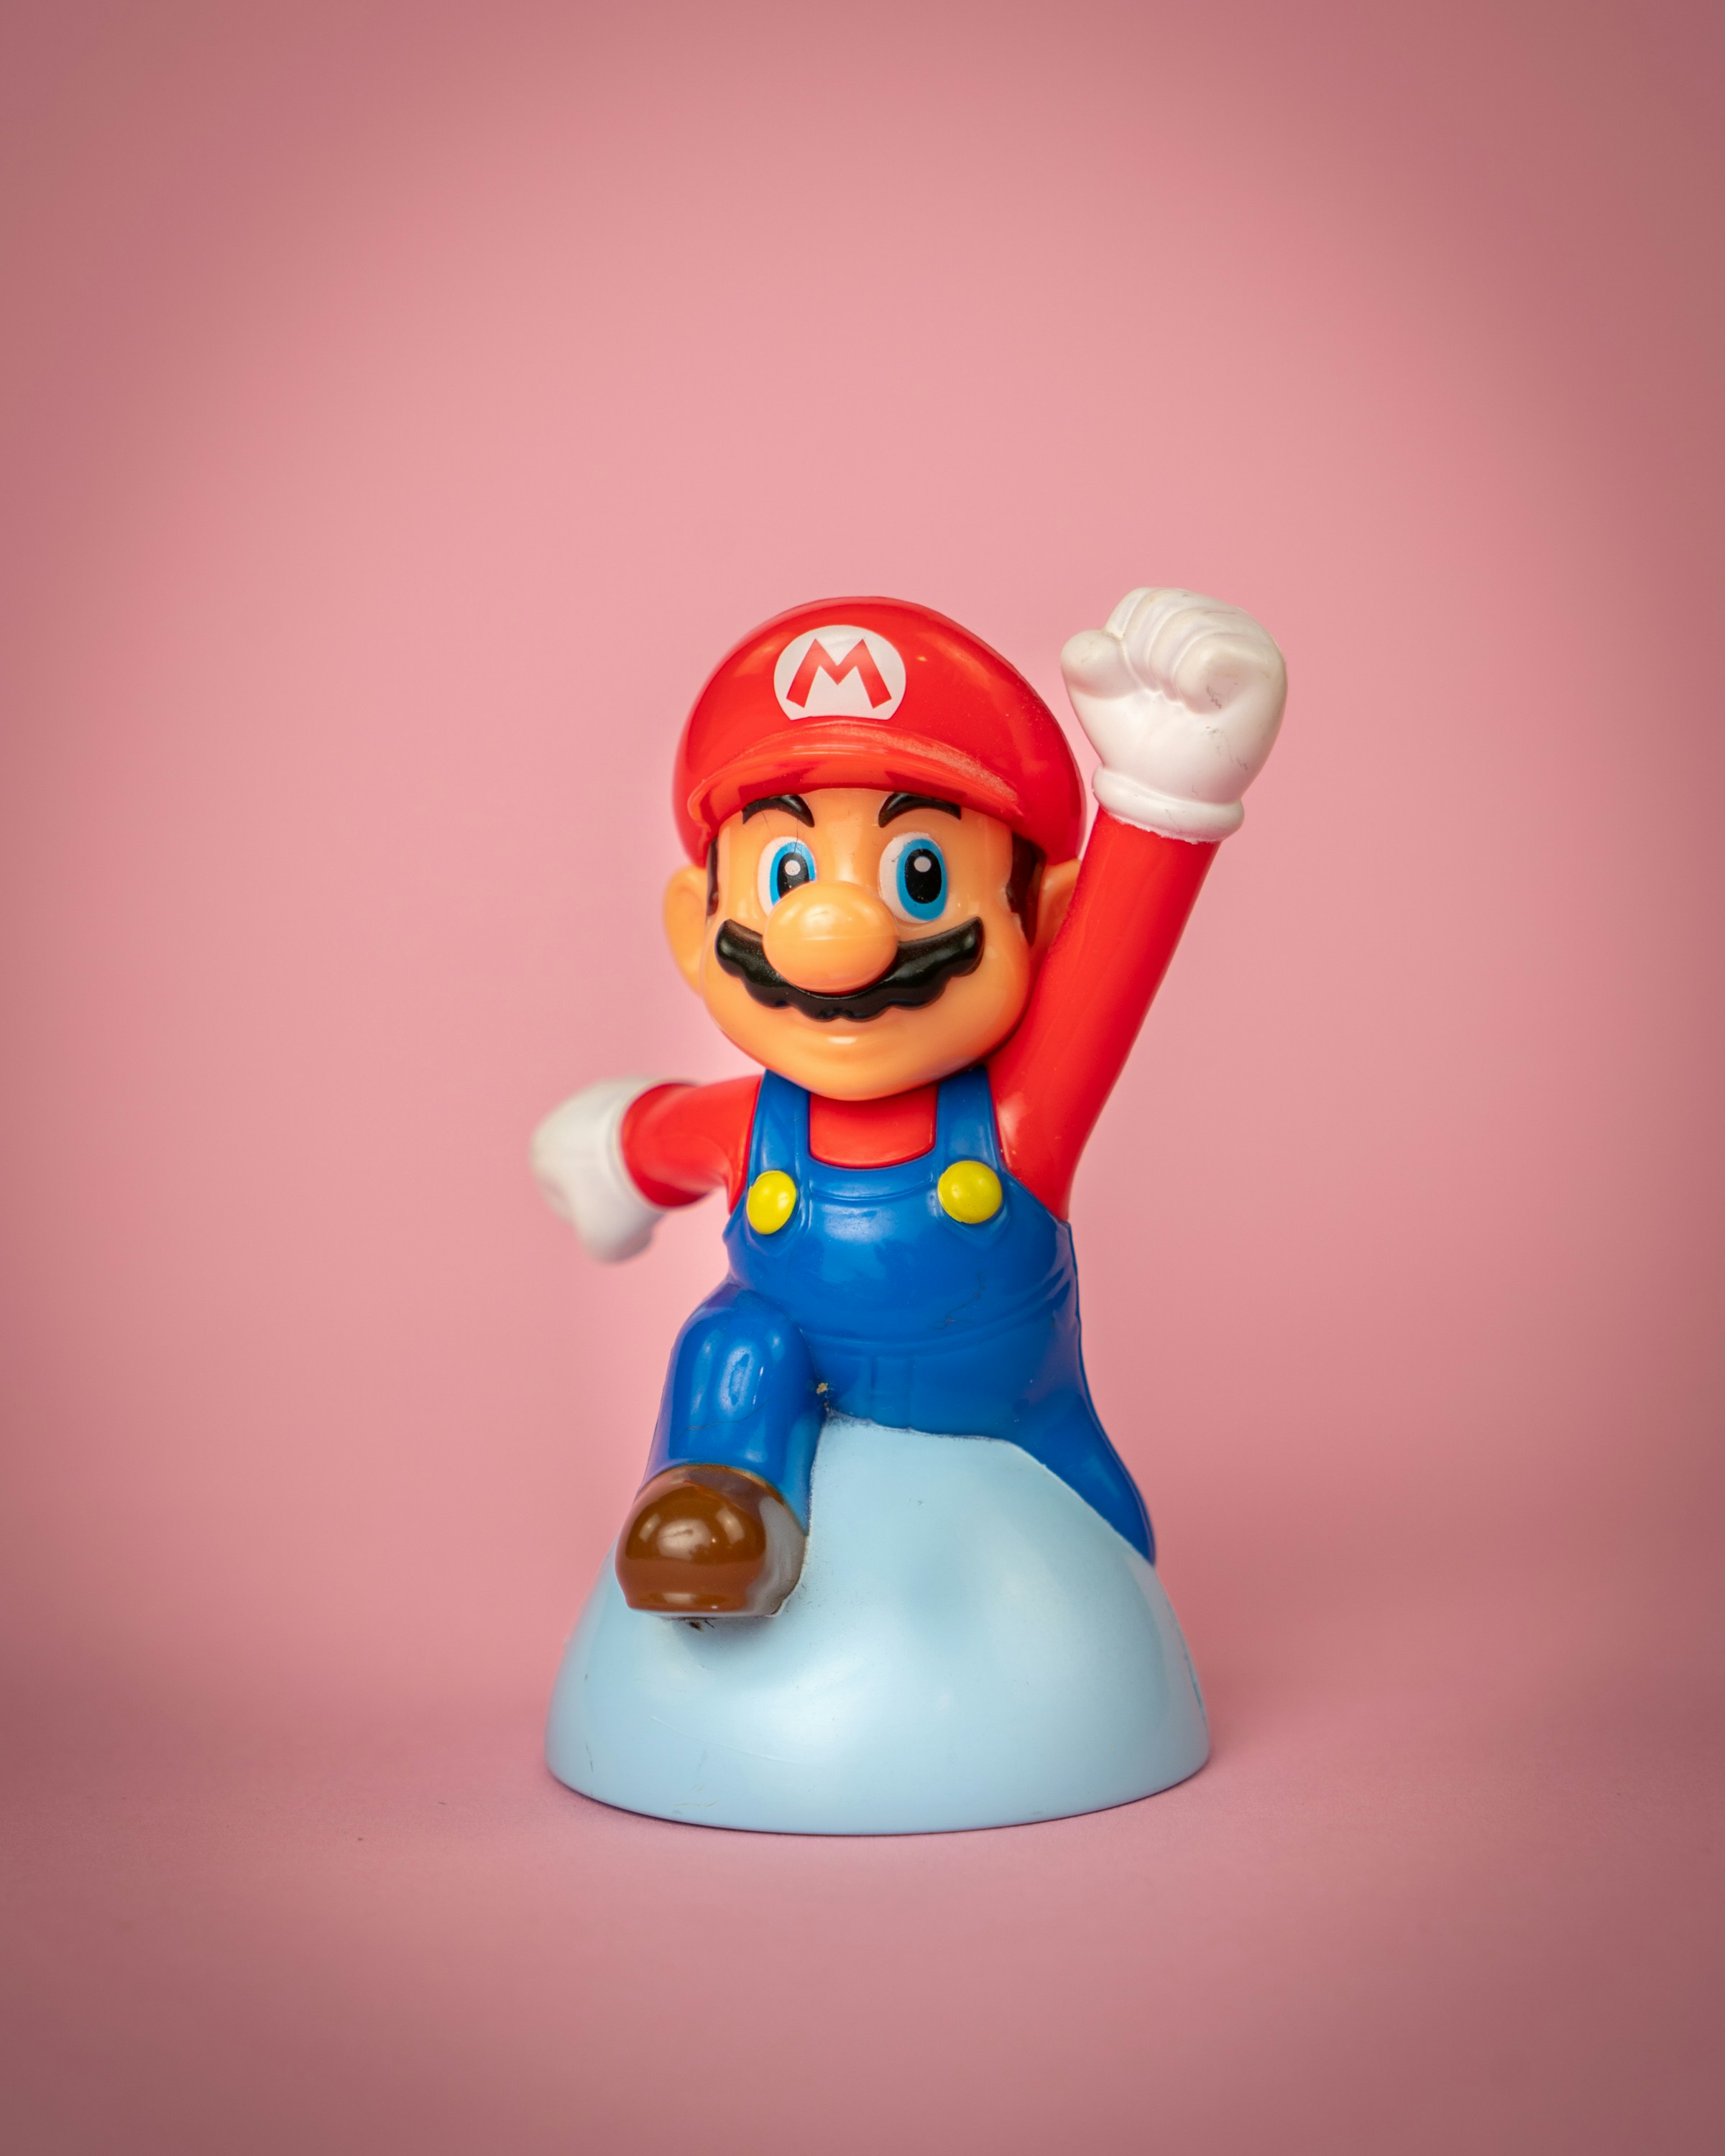 Mario from Nintendo Videogames